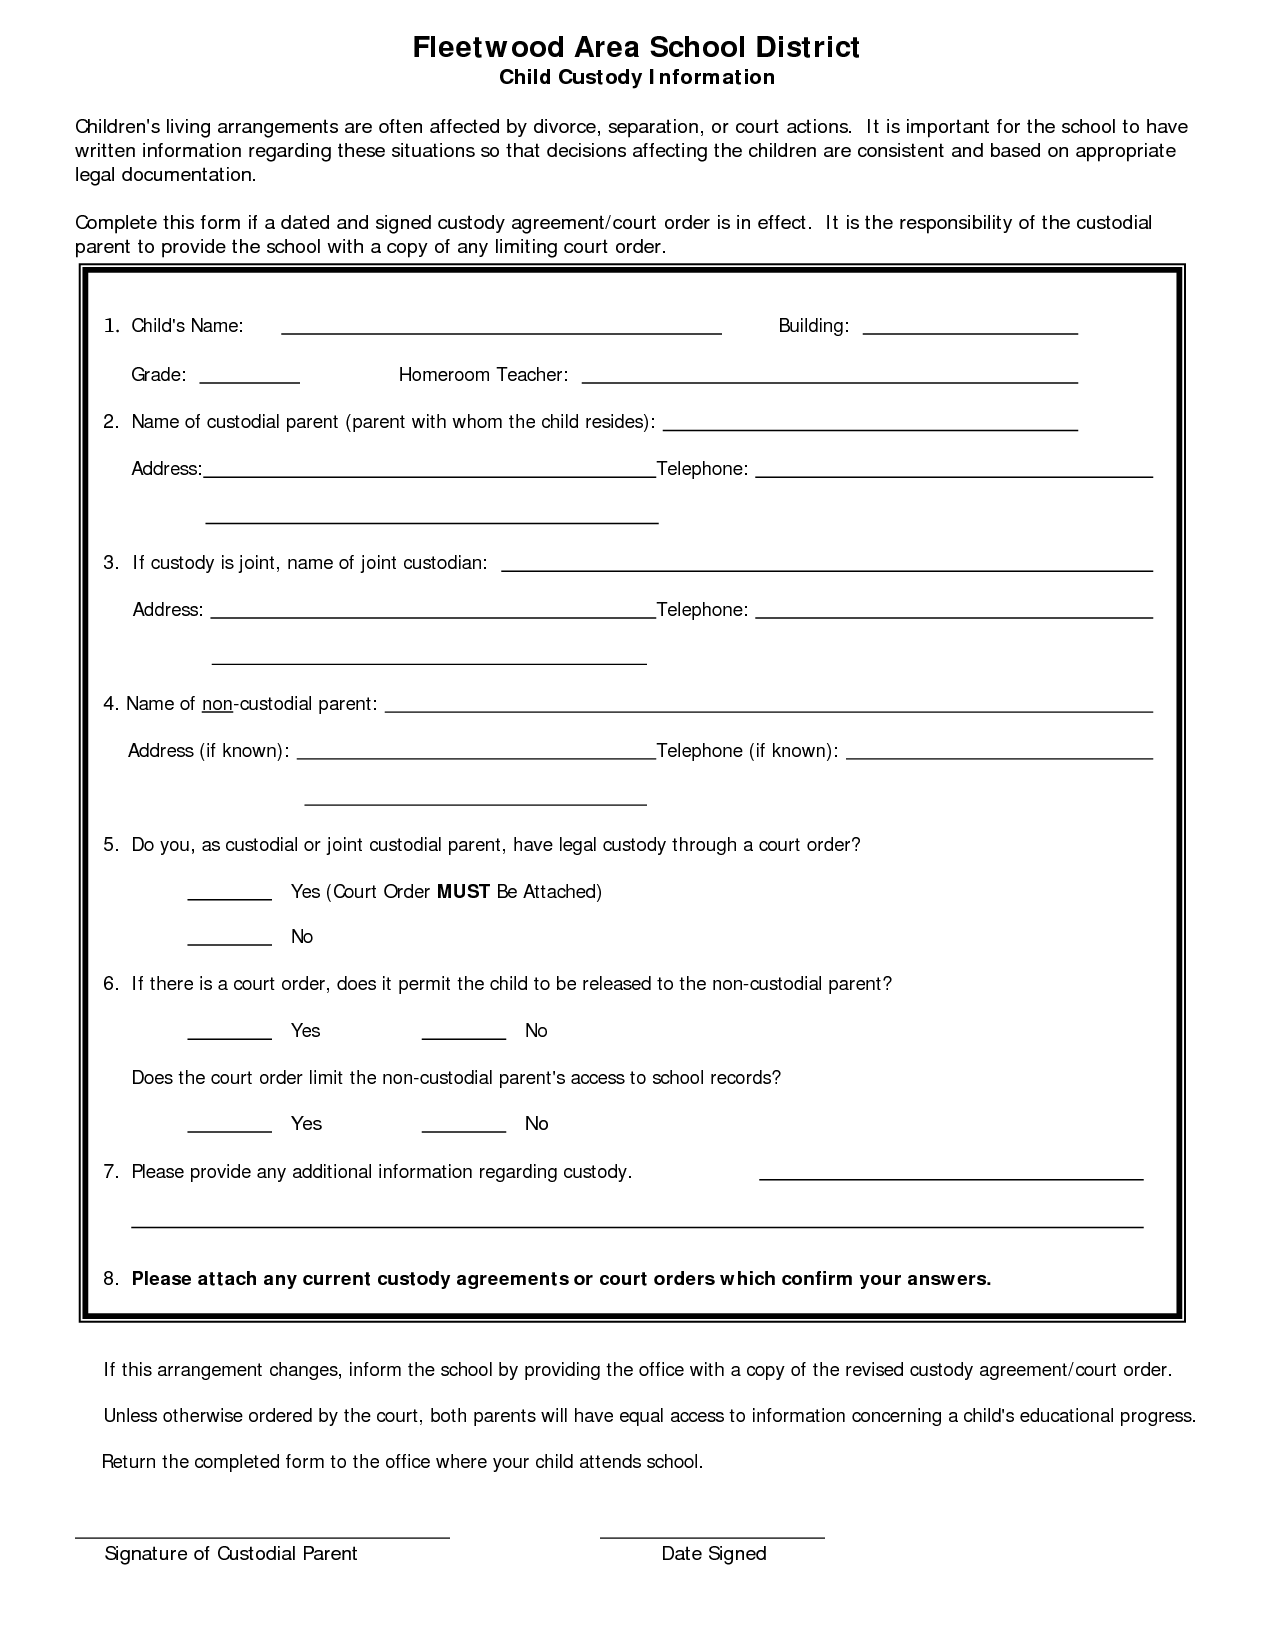 printable-child-custody-agreement-template-printable-templates